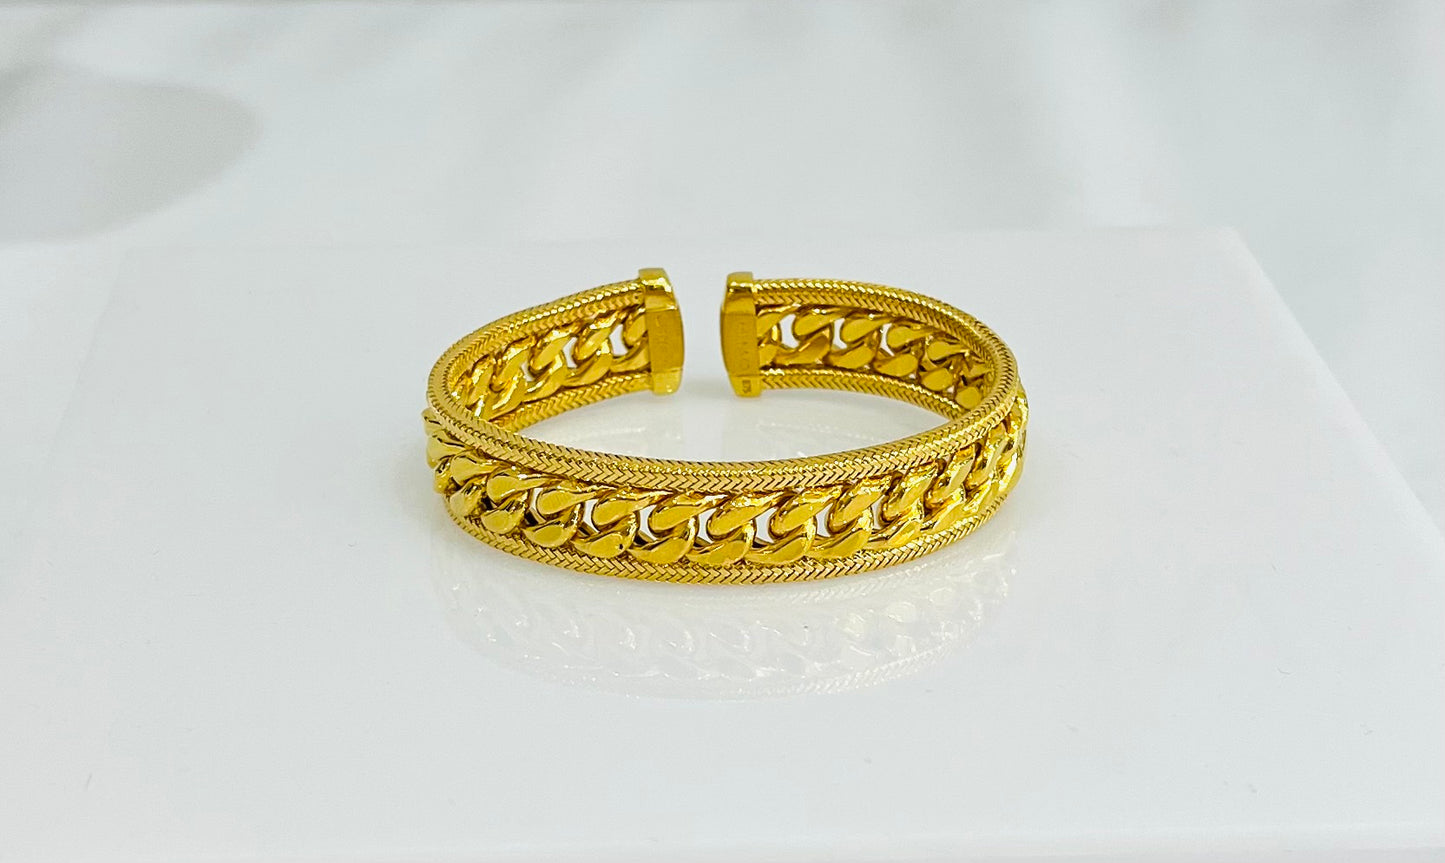 21k Gold Himo Cuban Link Cuff Bracelet